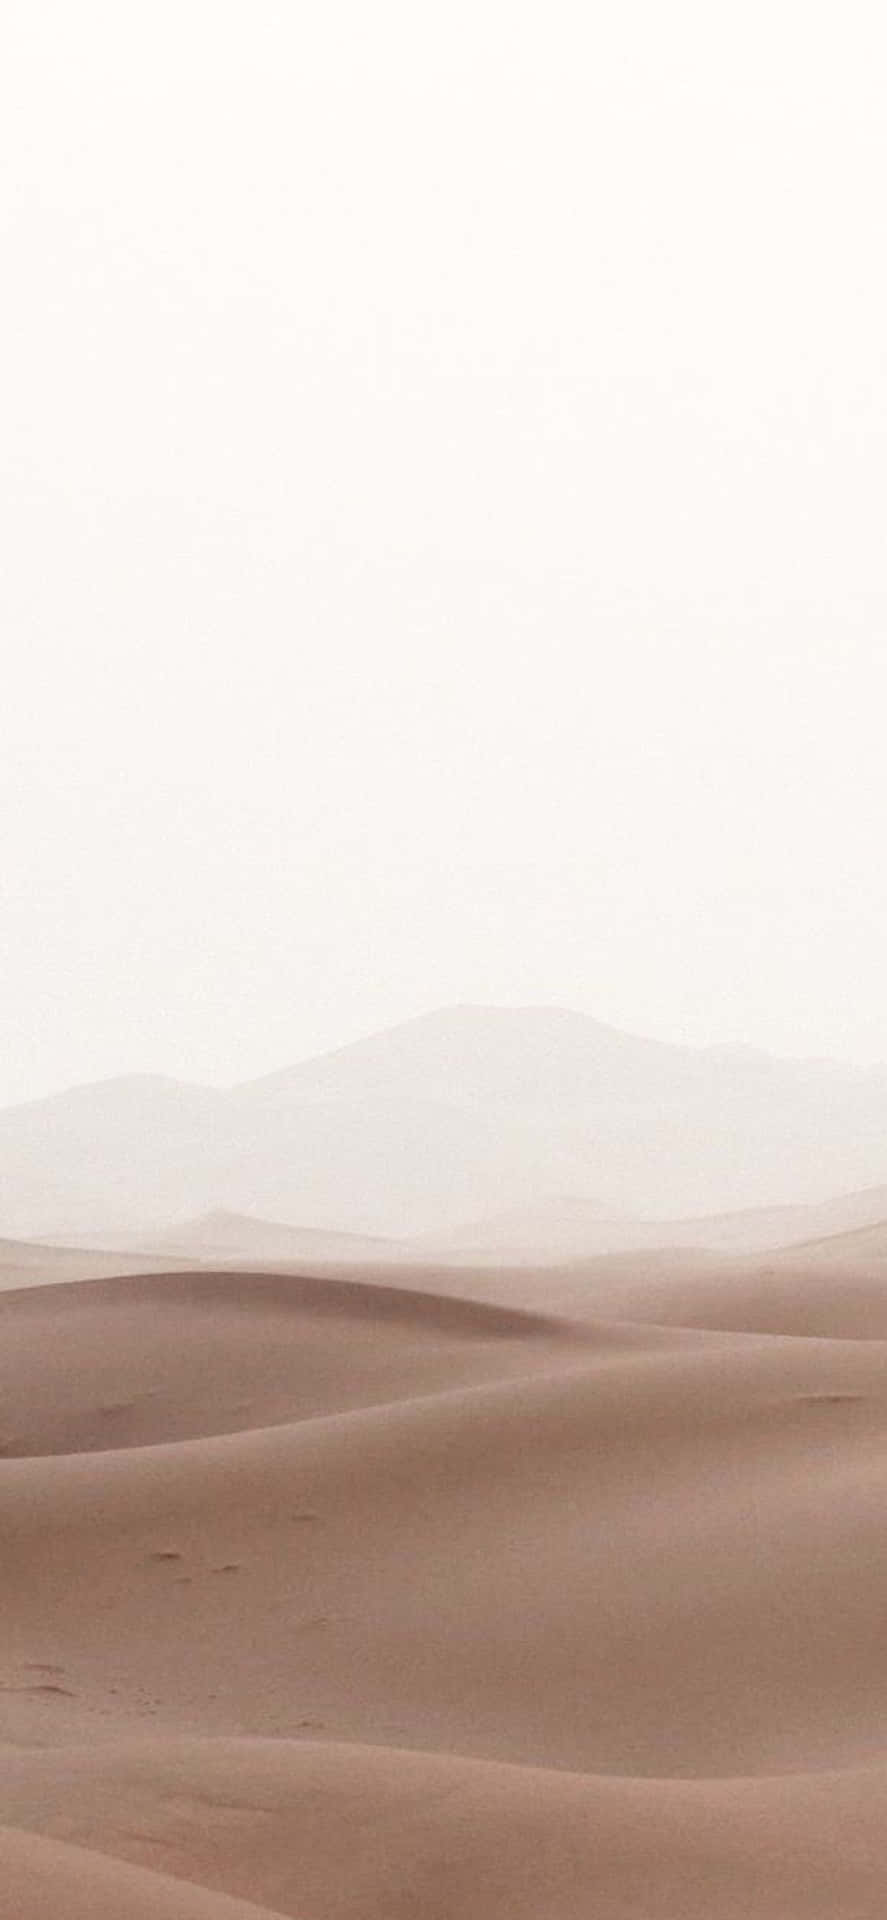 iPhone X Minimal Desert Sands Background